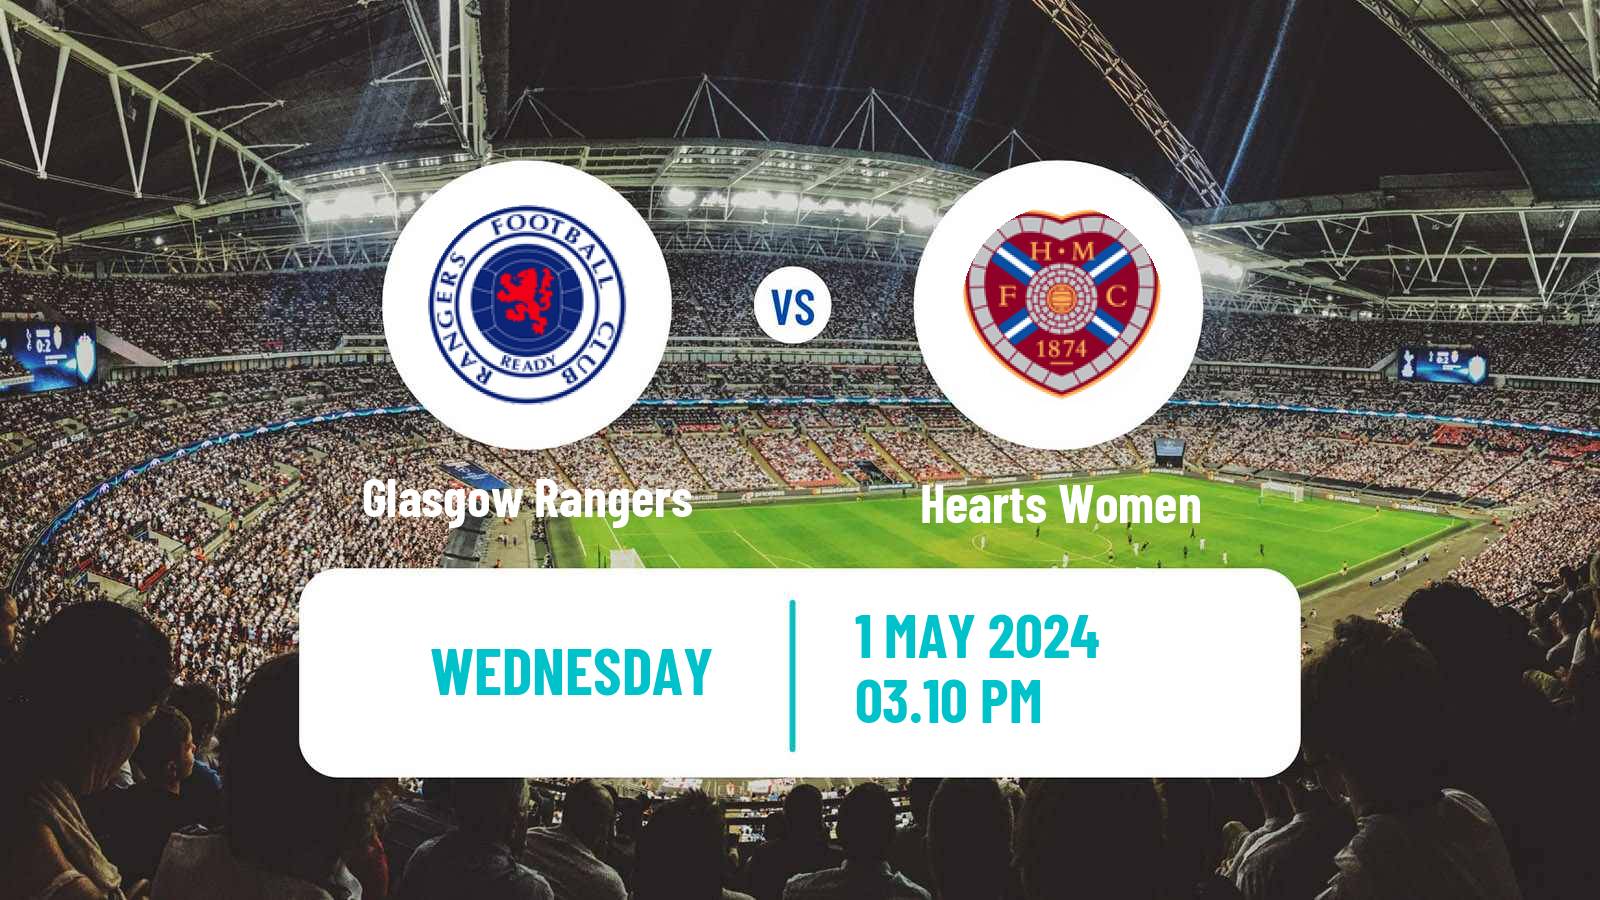 Soccer Scottish SWPL 1 Women Glasgow Rangers - Hearts